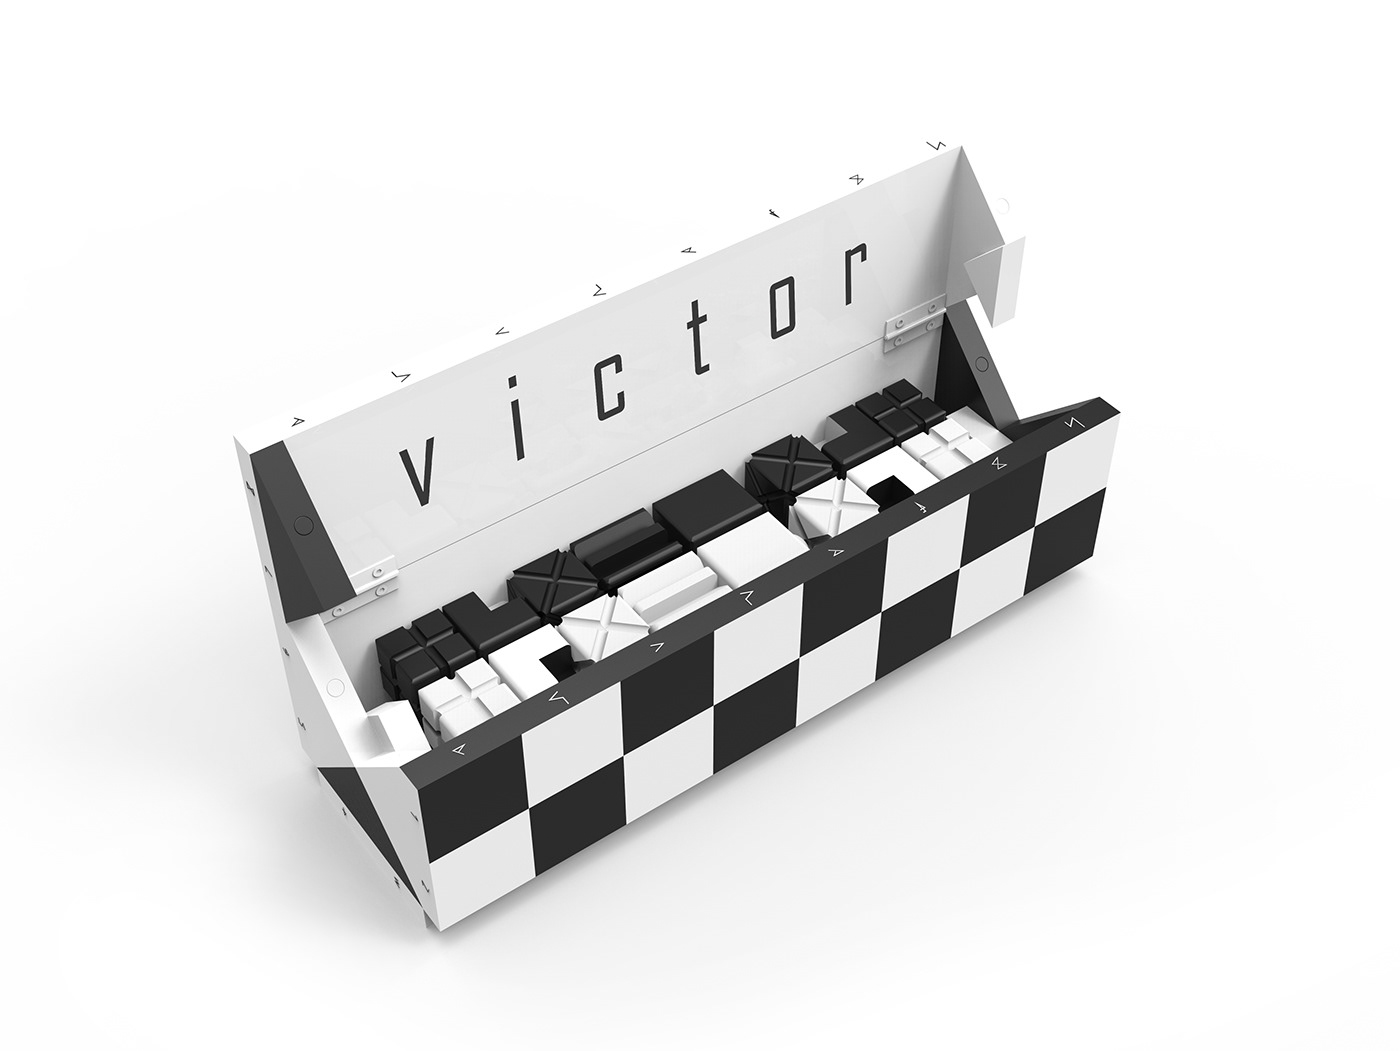 Victor chess innovative chess darko nikolic design innovative chess figures innovative chess set cubical chess